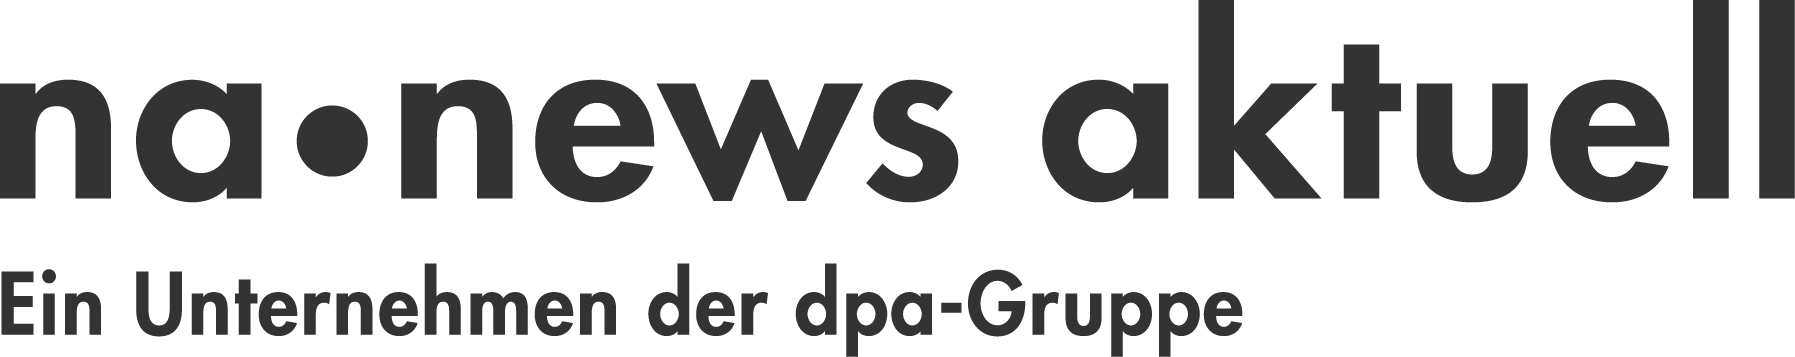 News Aktuell logo